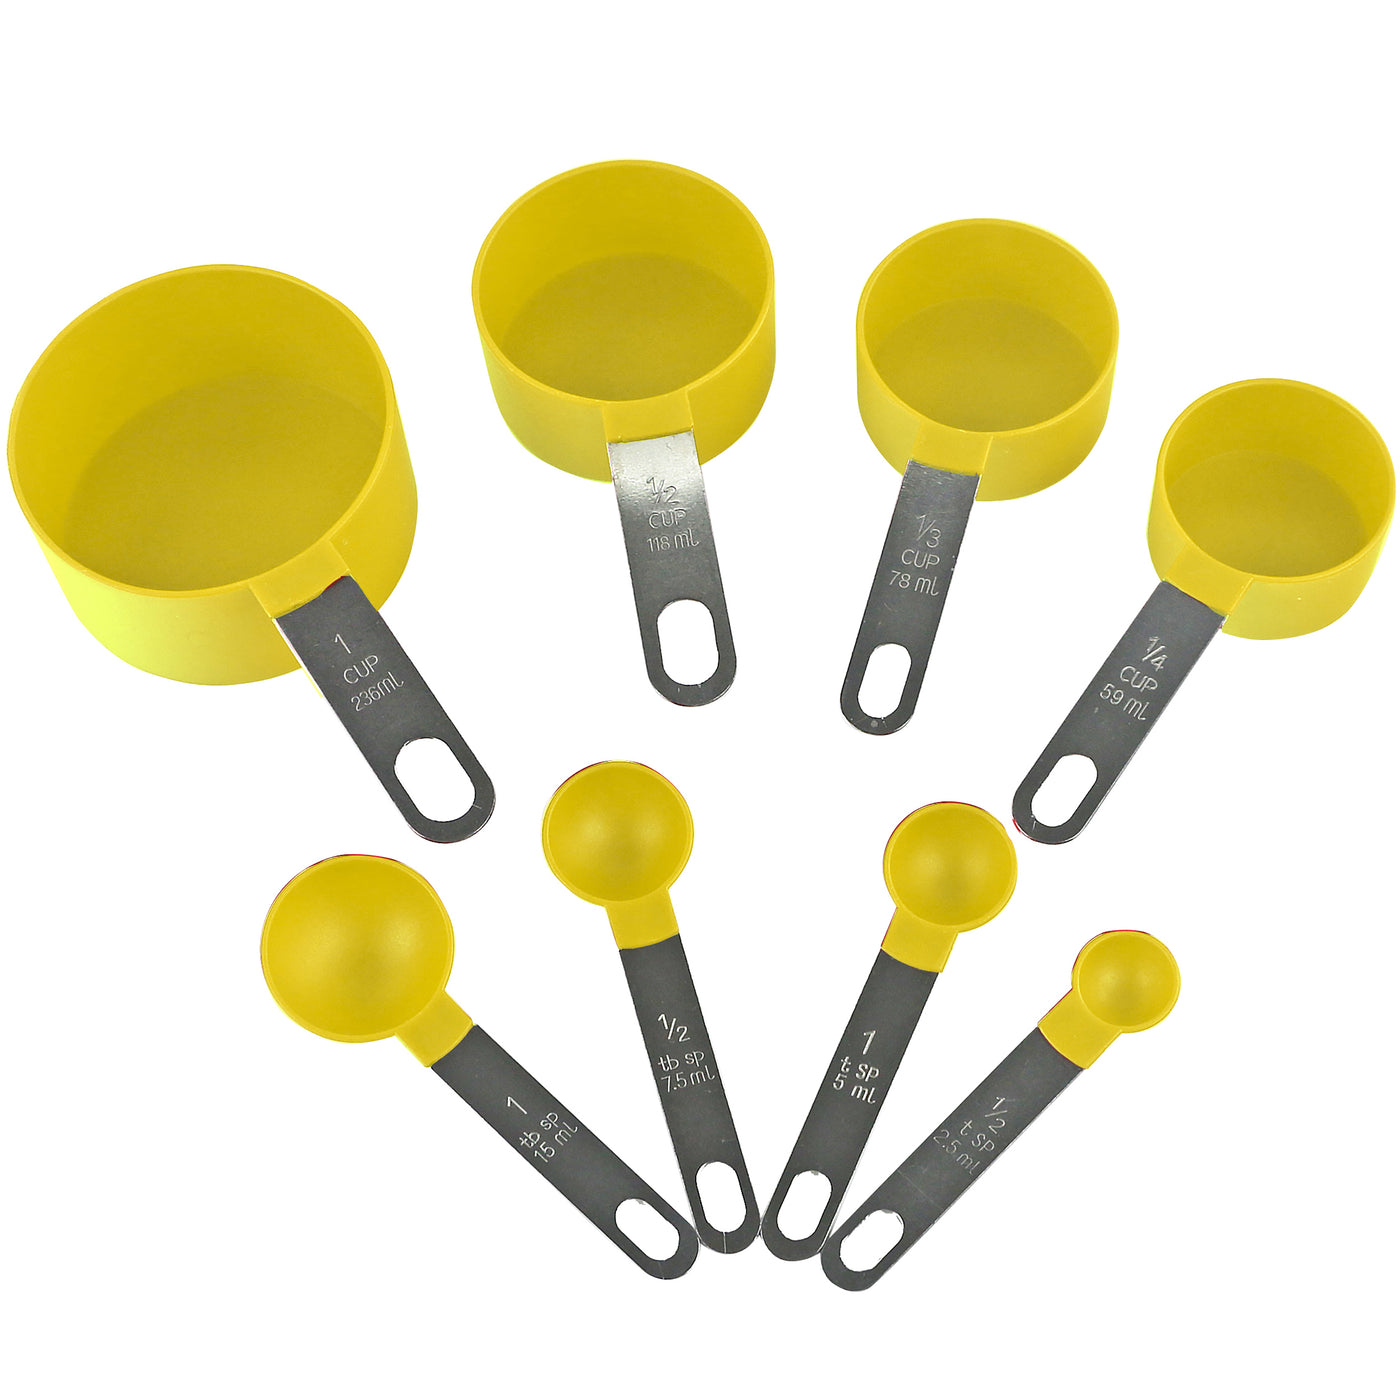 Measuring Cups and Spoon Holder, Organizer, Hanger, Kitchen